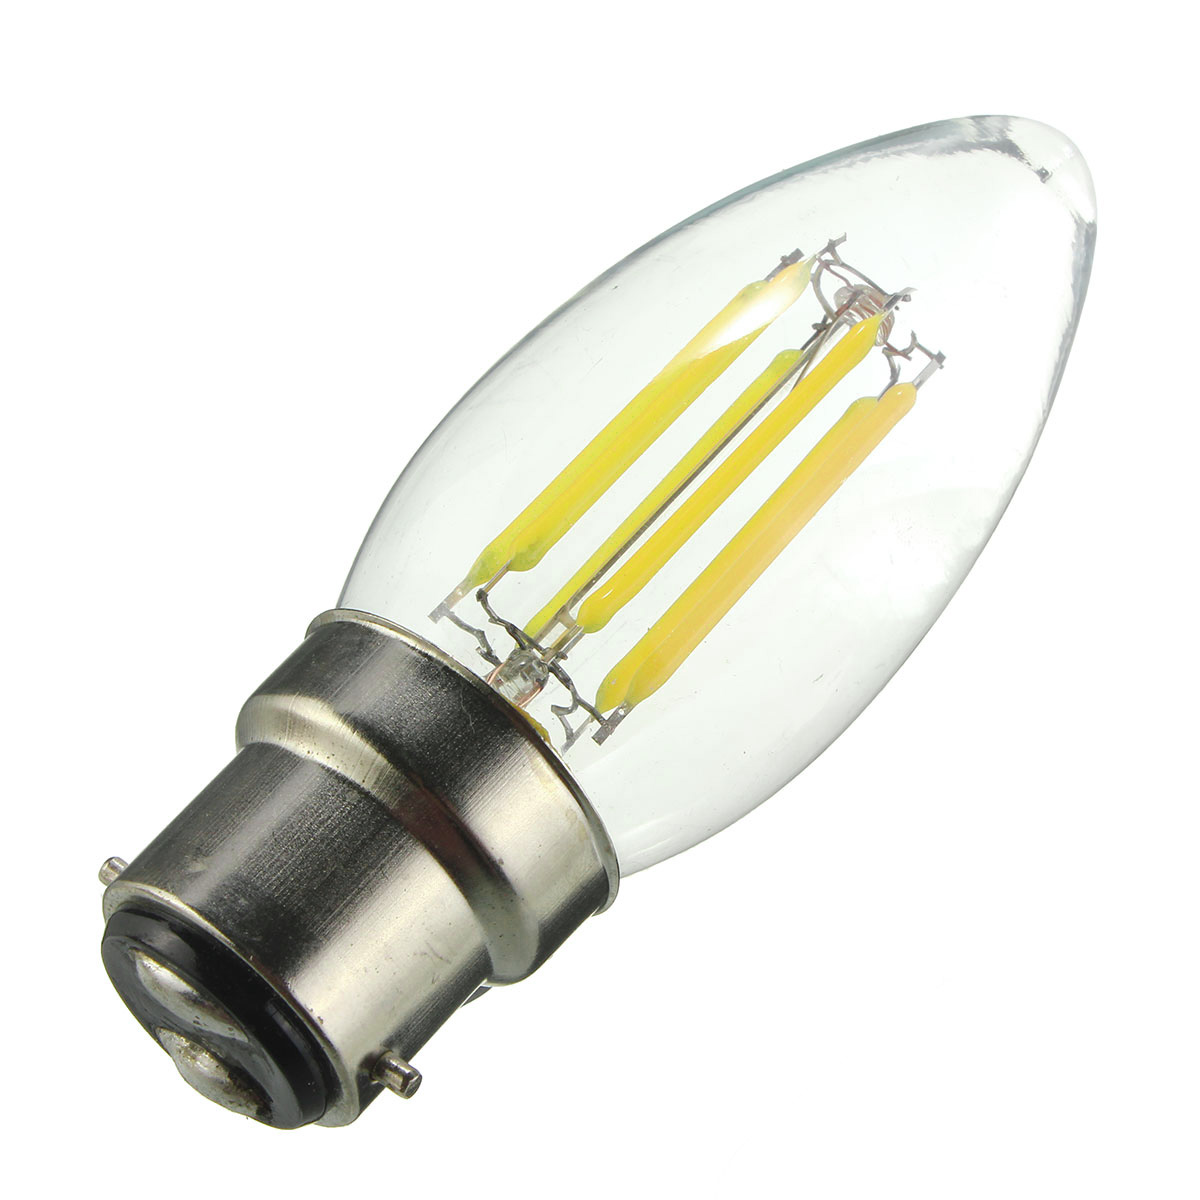 Dimmable-B22-C35-6W-COB-Pure-White-Warm-White-Edison-Retro-Light-Lamp-Bulb-AC220V-1069706-7